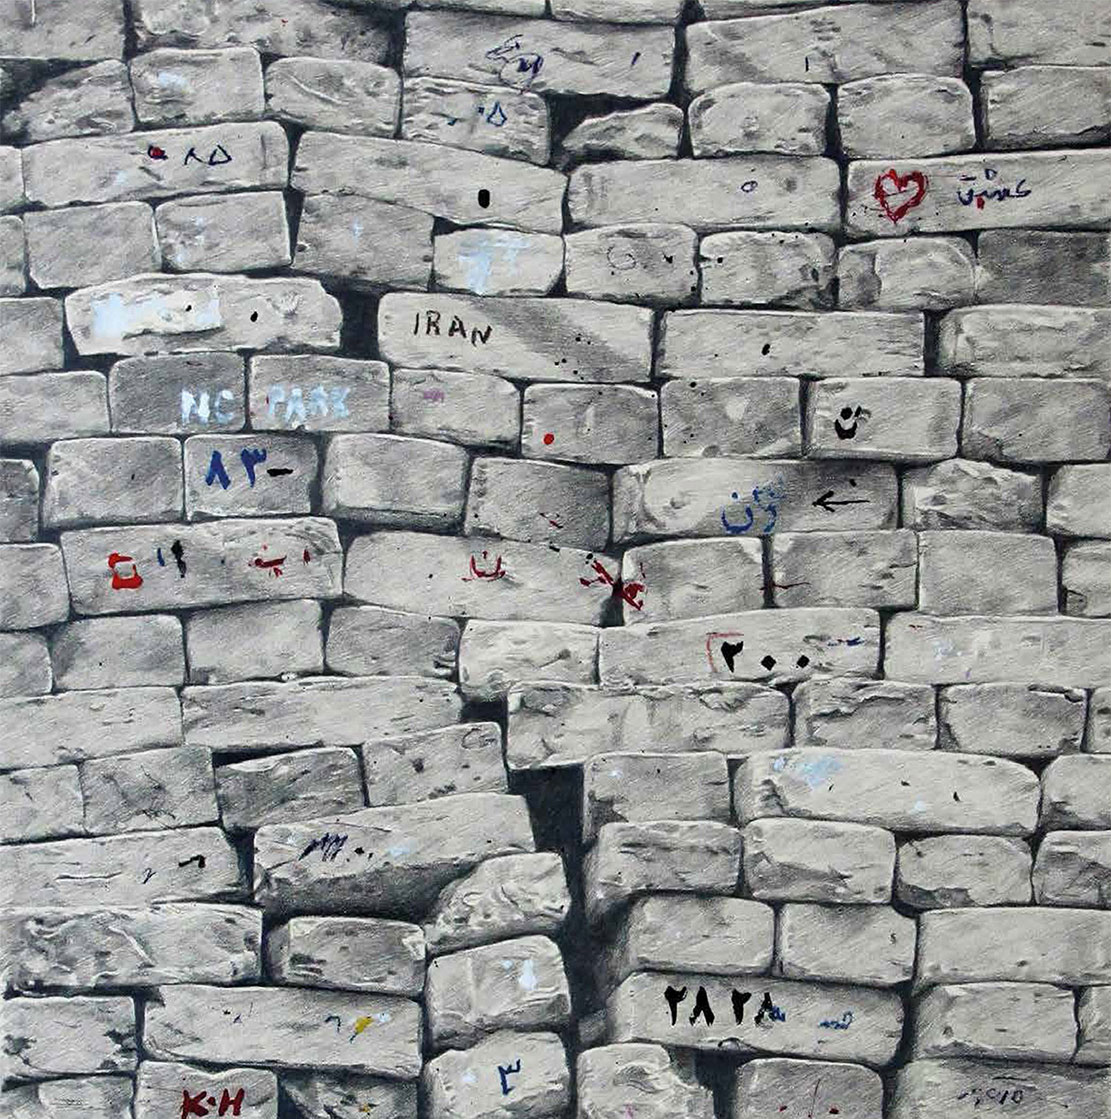 Daryoush Gharahzad - Brick Wall - Pencil and Acrylic on Cardboard - 61x56cm (detail) - 2017